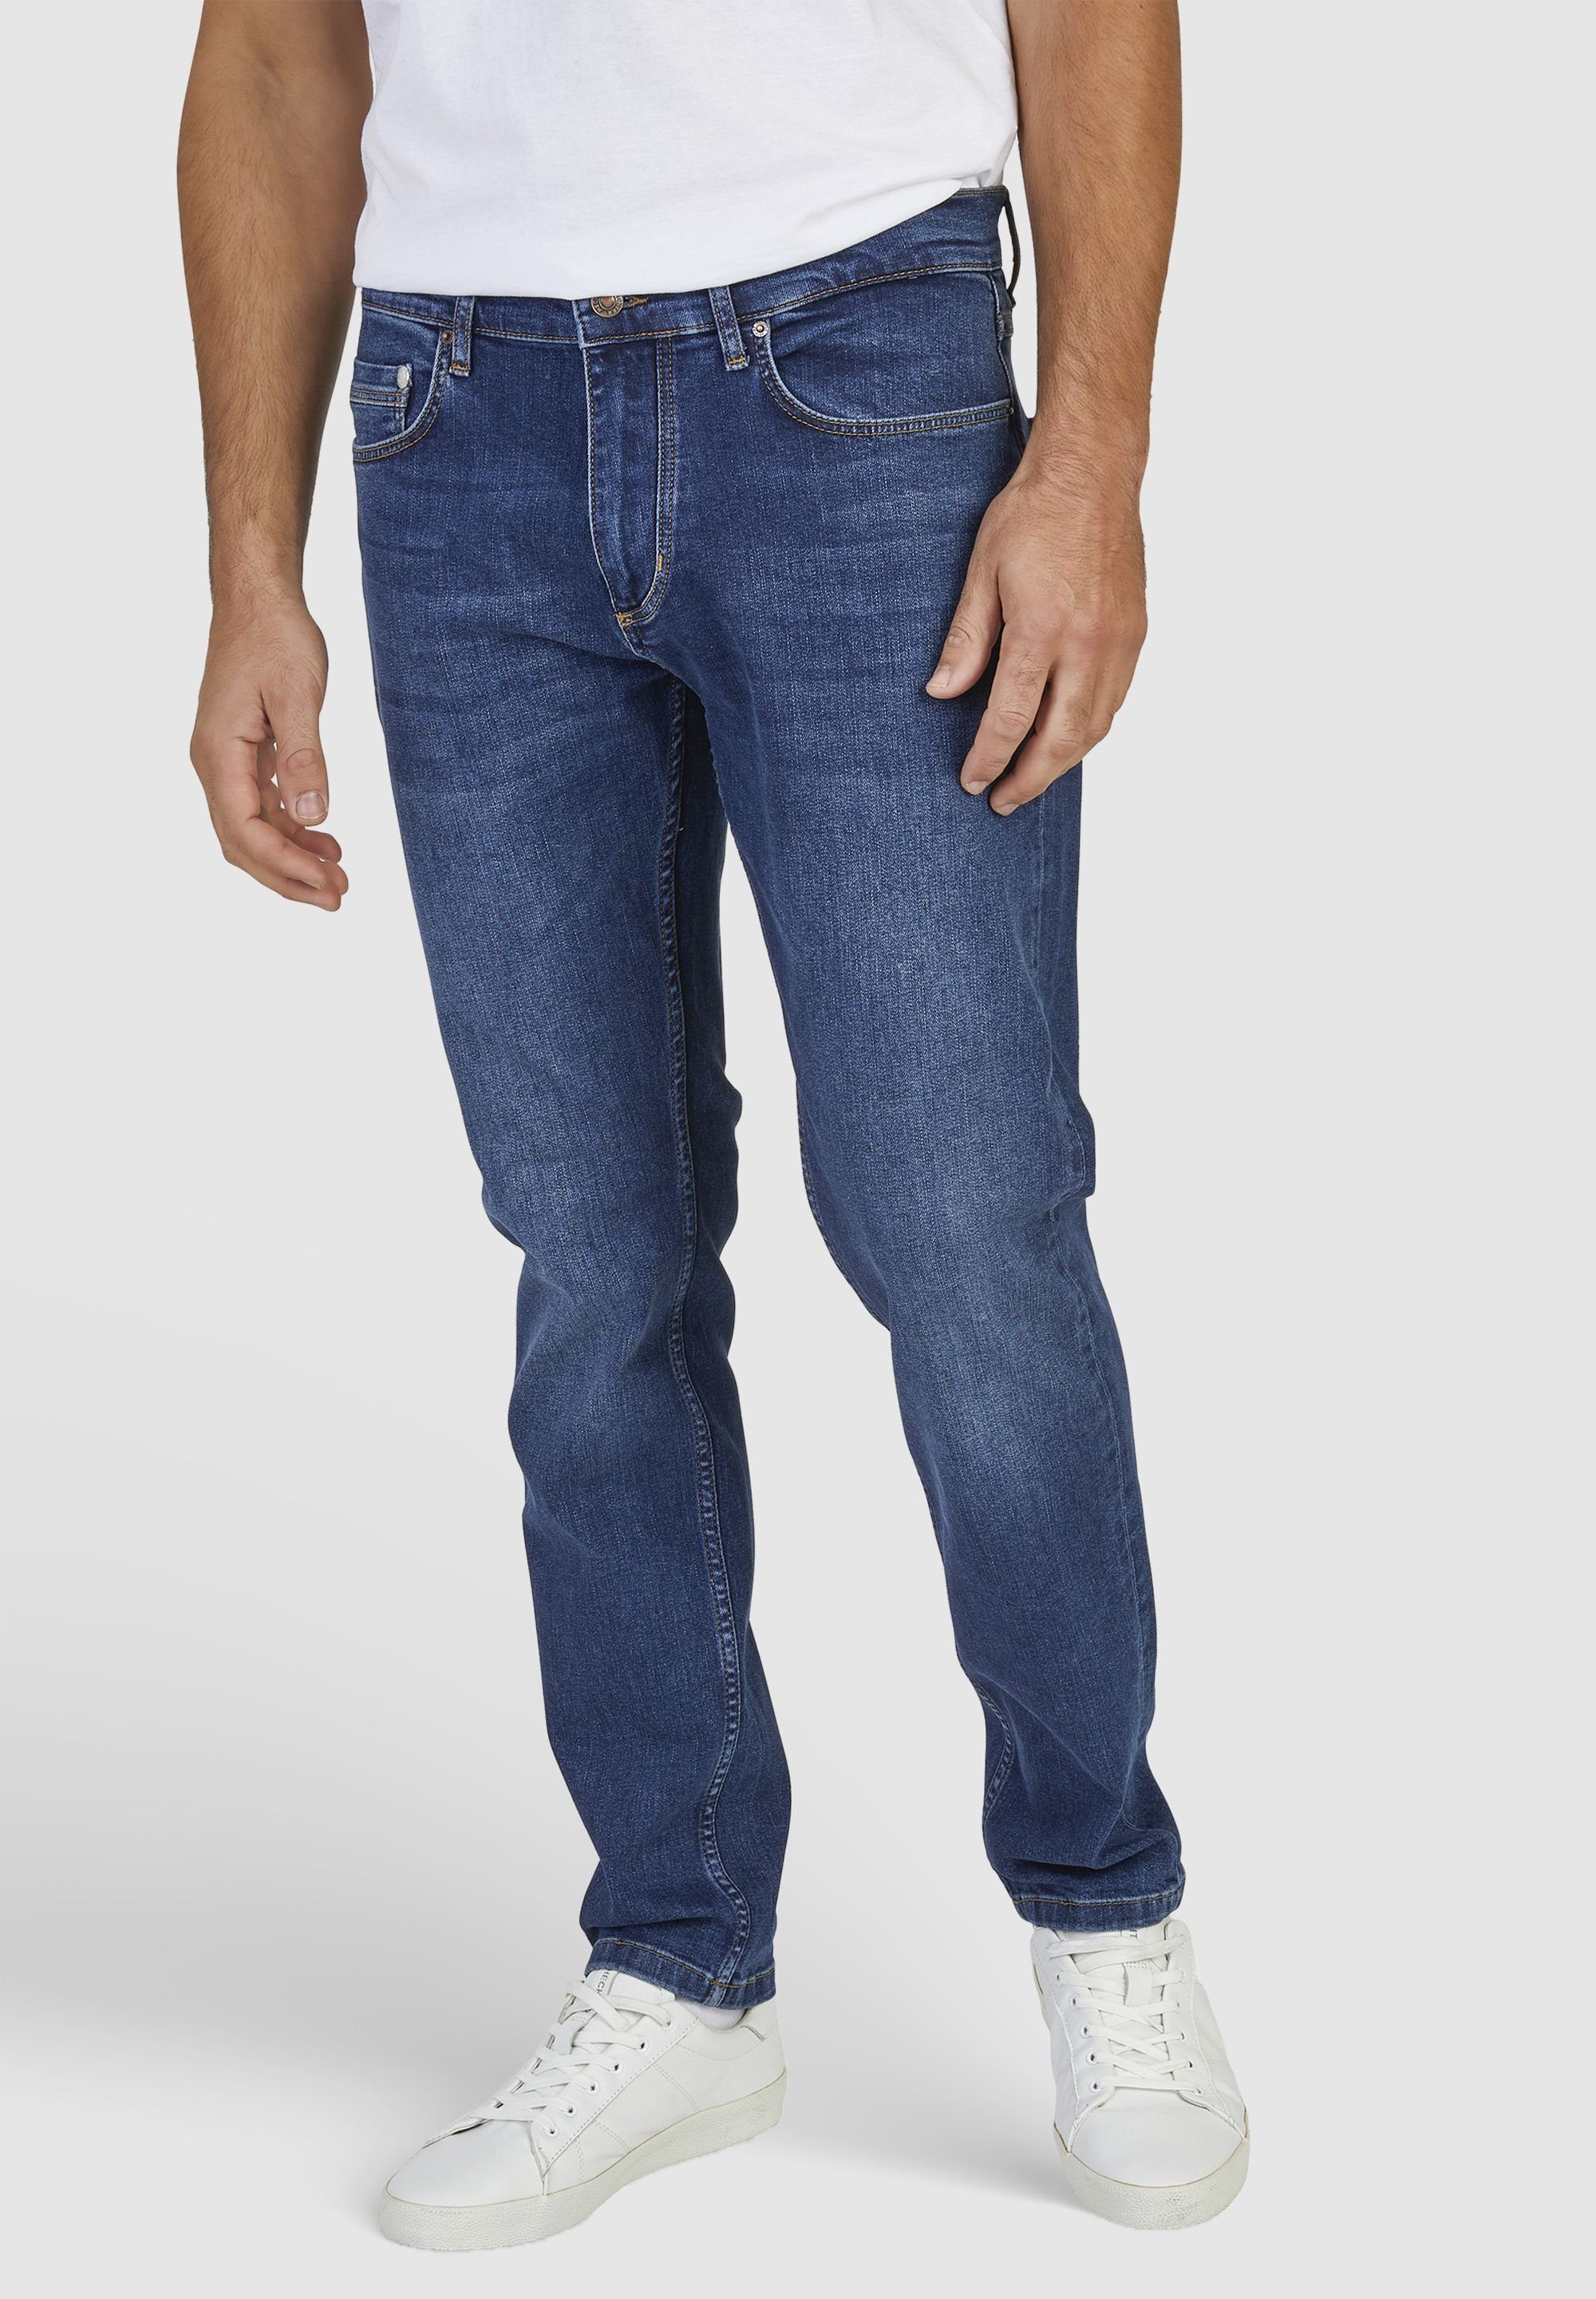 HECHTER PARIS 5-Pocket-Jeans blue dark Unimuster